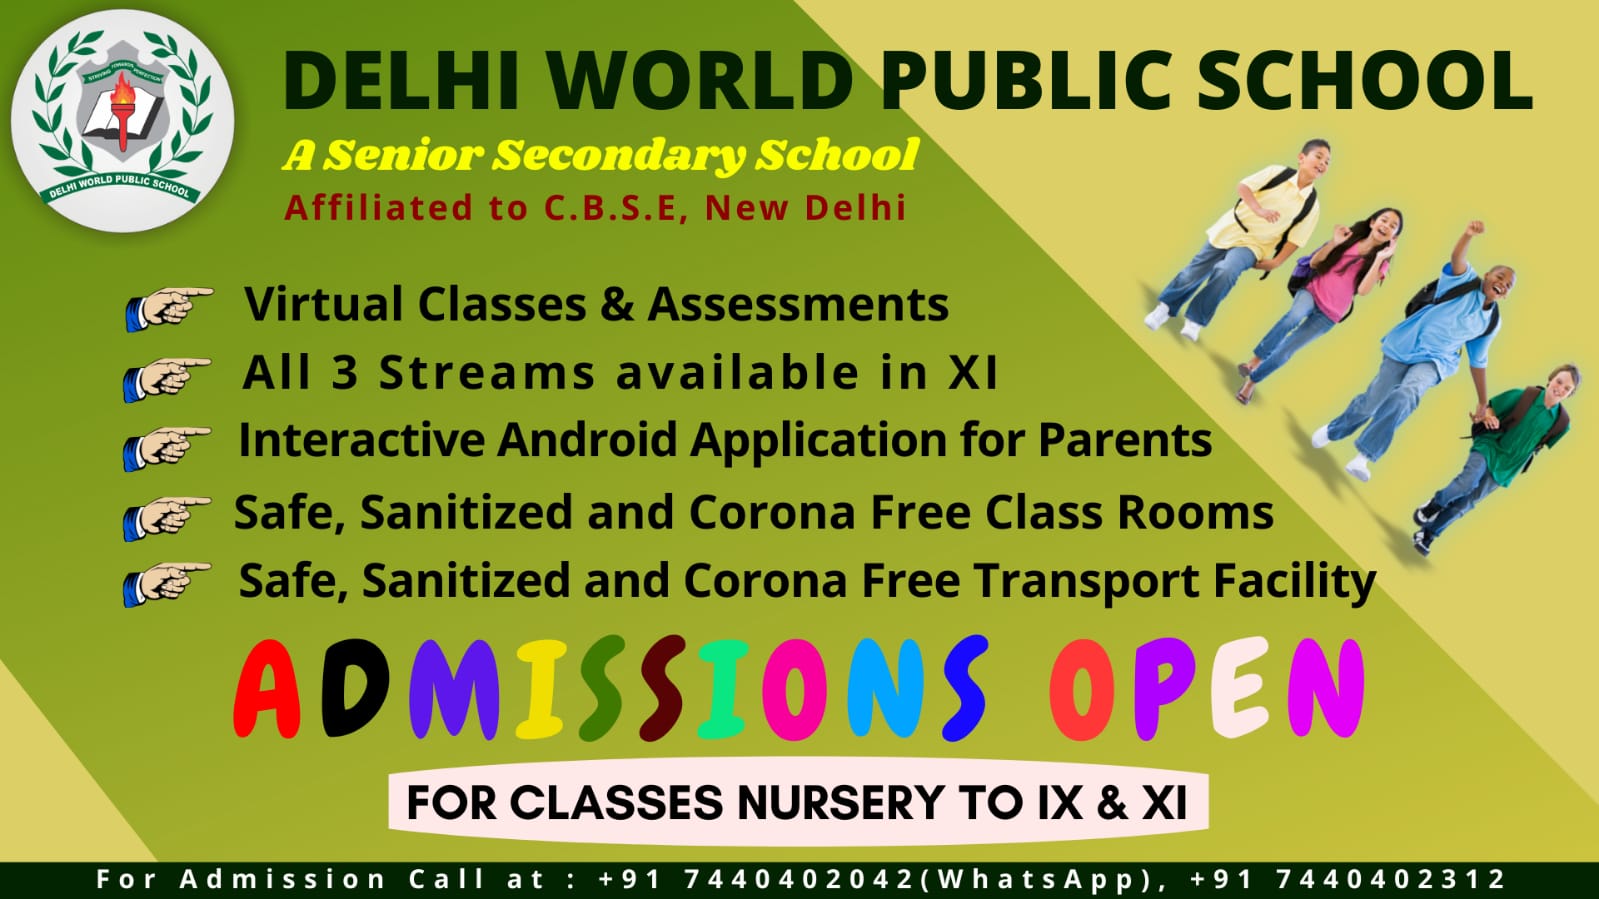 Delhi World Public School Bhatapara